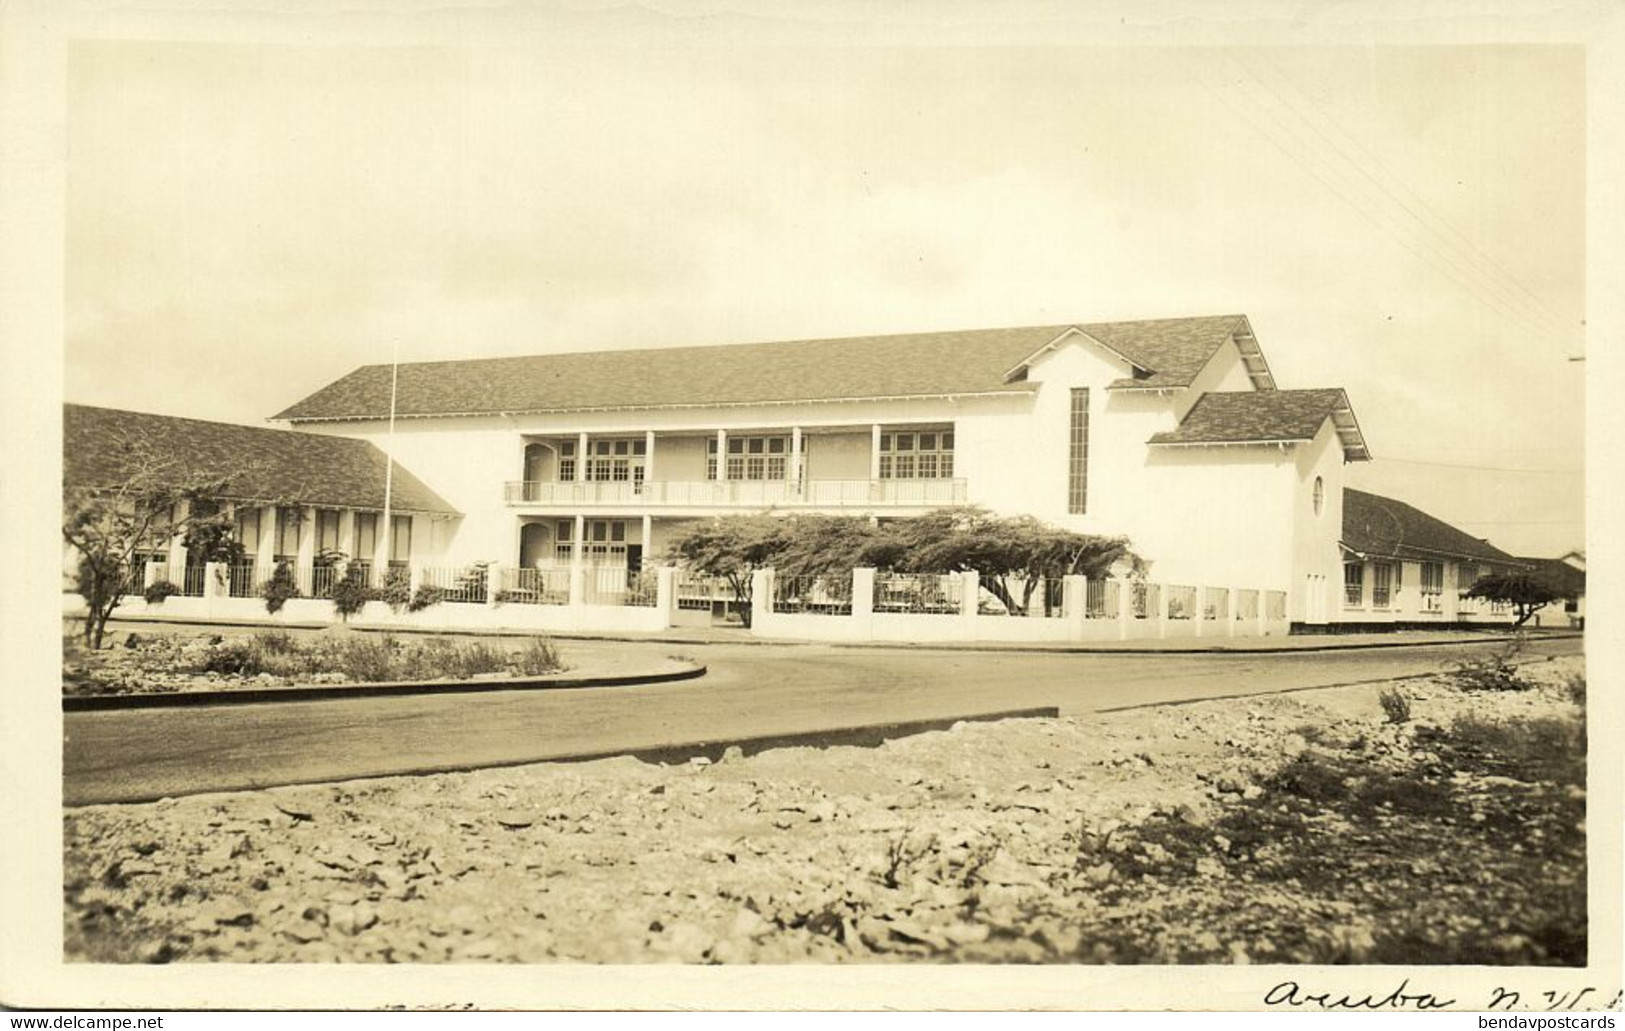 Aruba, N.W.I., Street Scene, Unknown Building (1940s) RPPC Postcard - Aruba